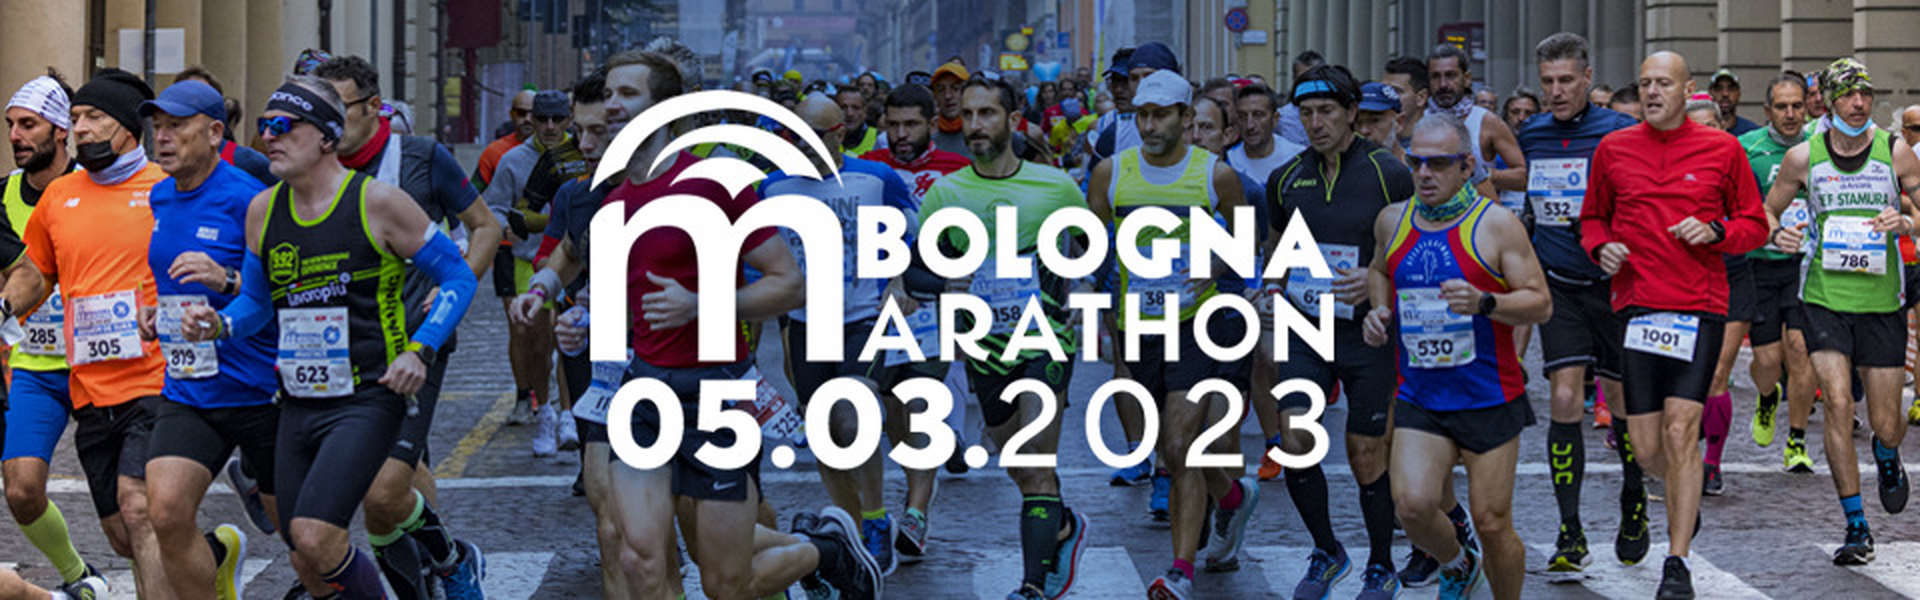 Bologna Marathon 